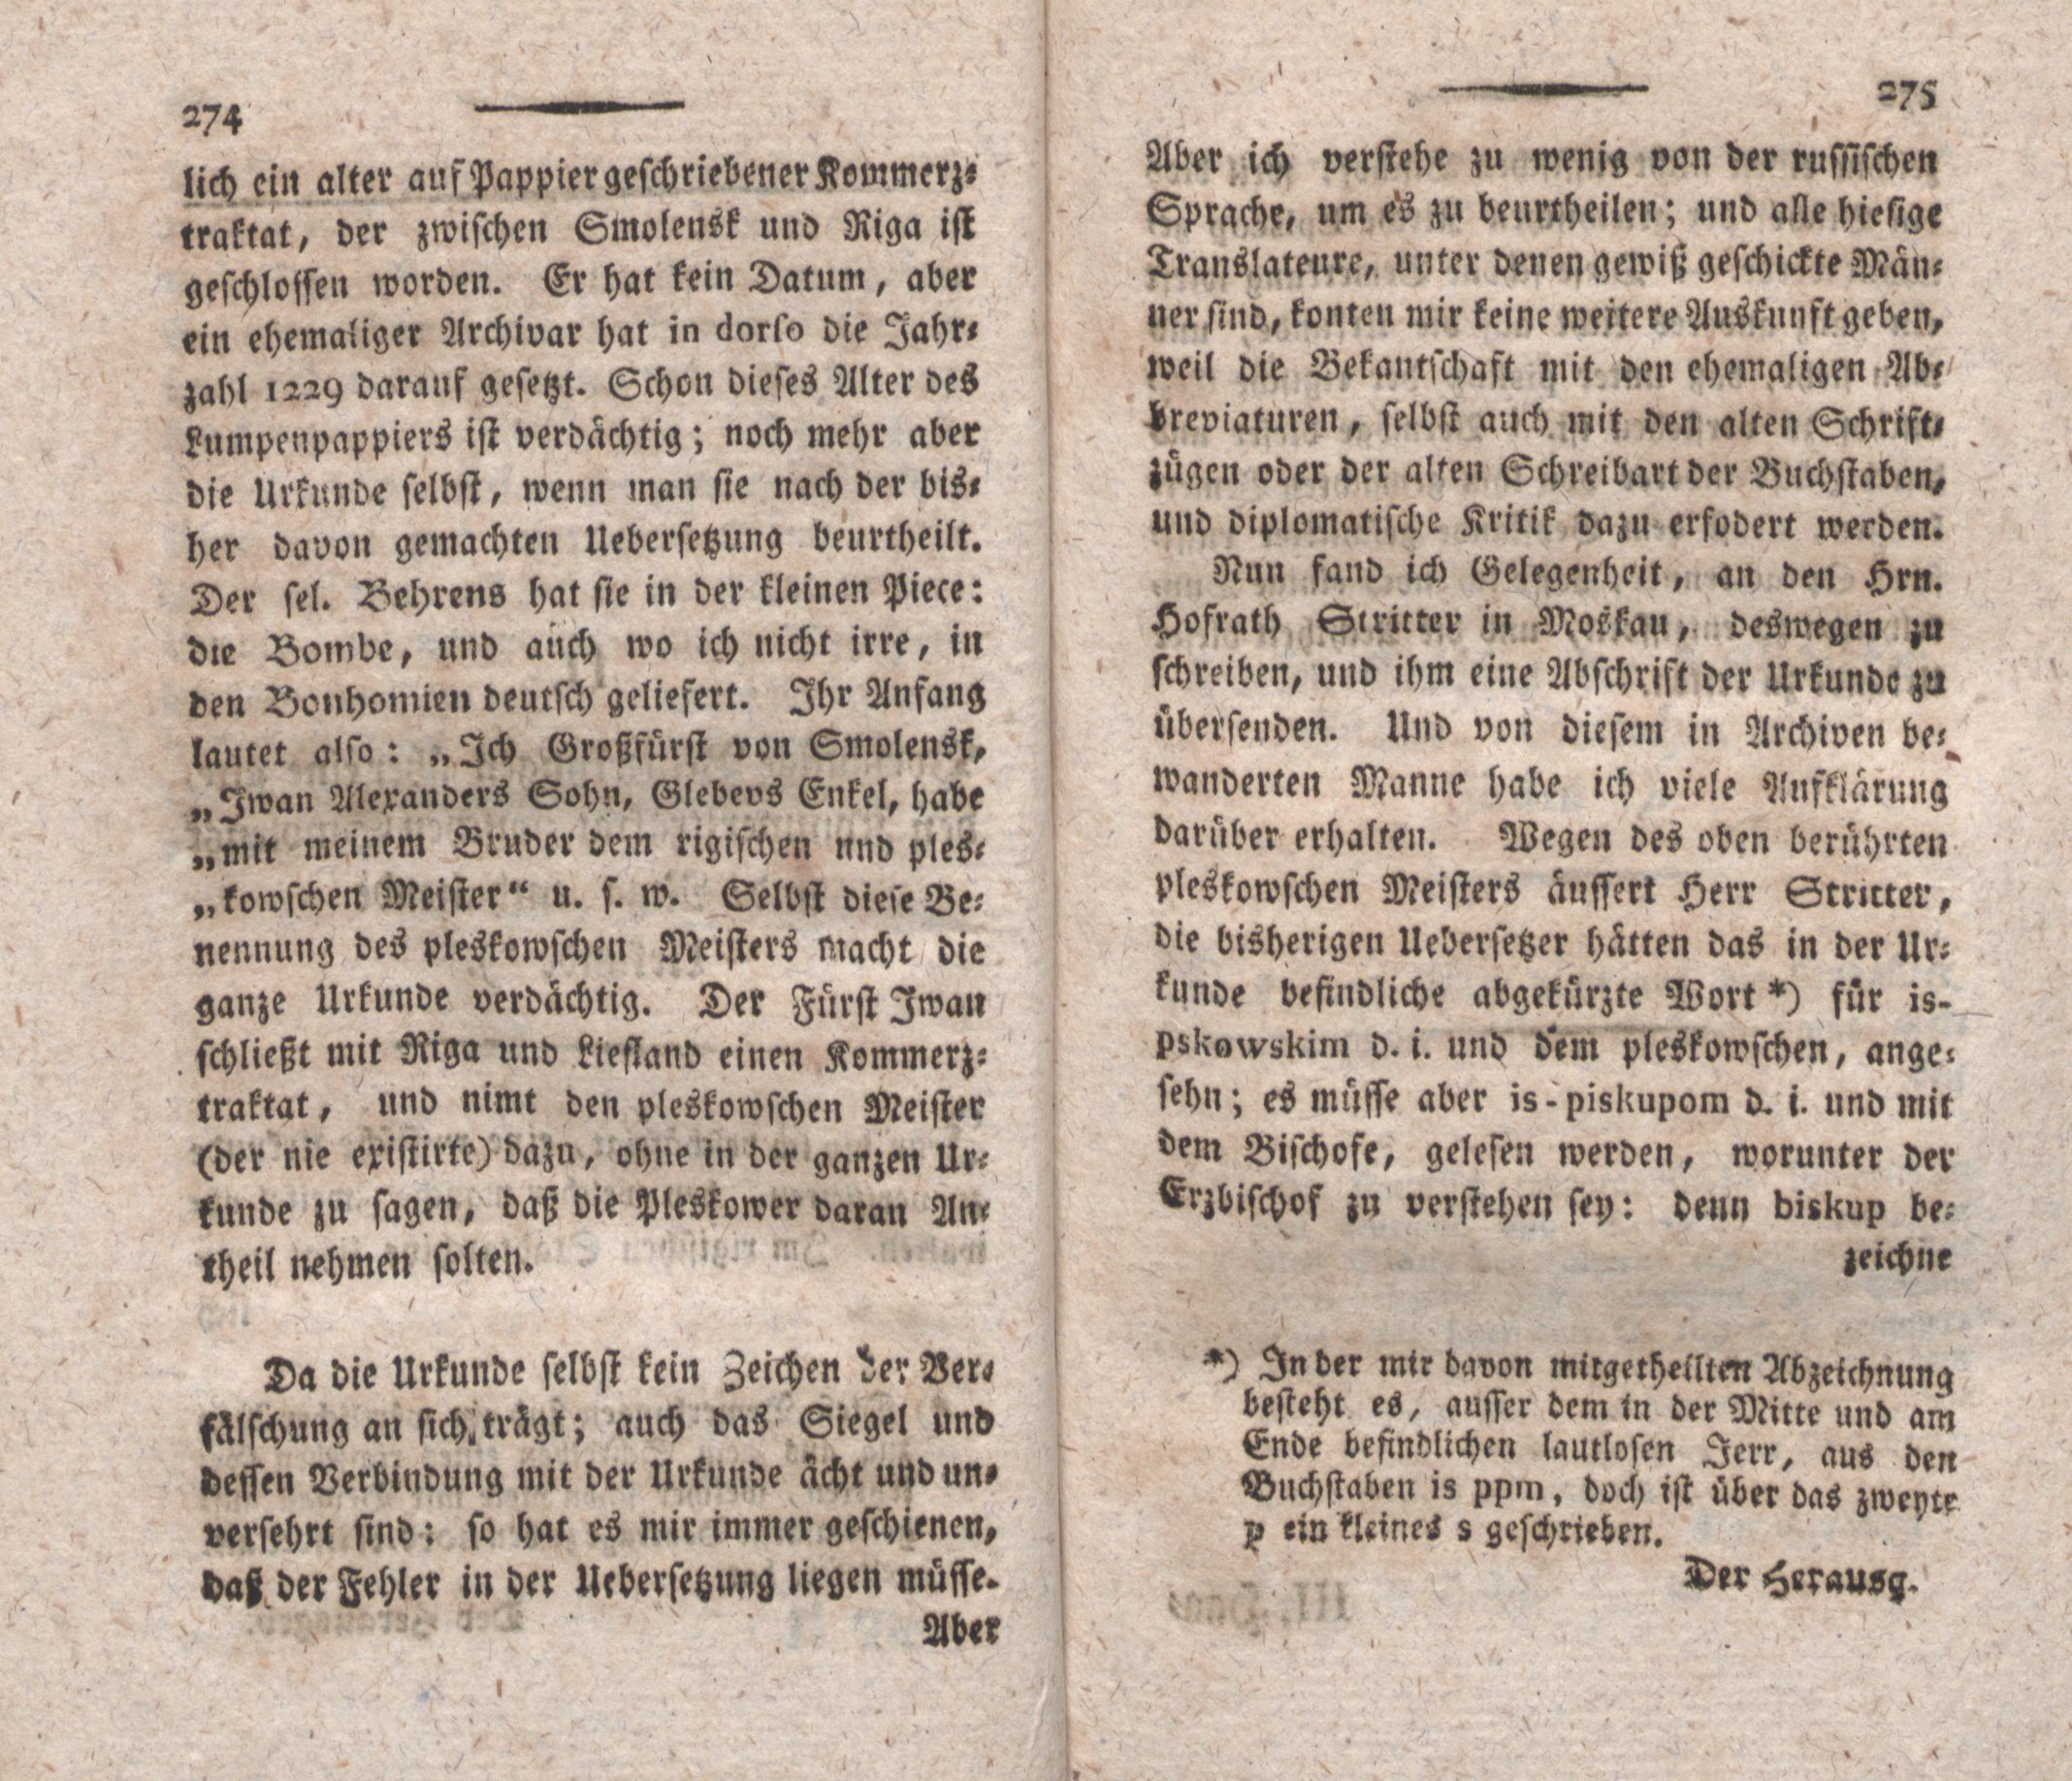 Neue nordische Miscellaneen [18] (1798) | 137. (274-275) Main body of text